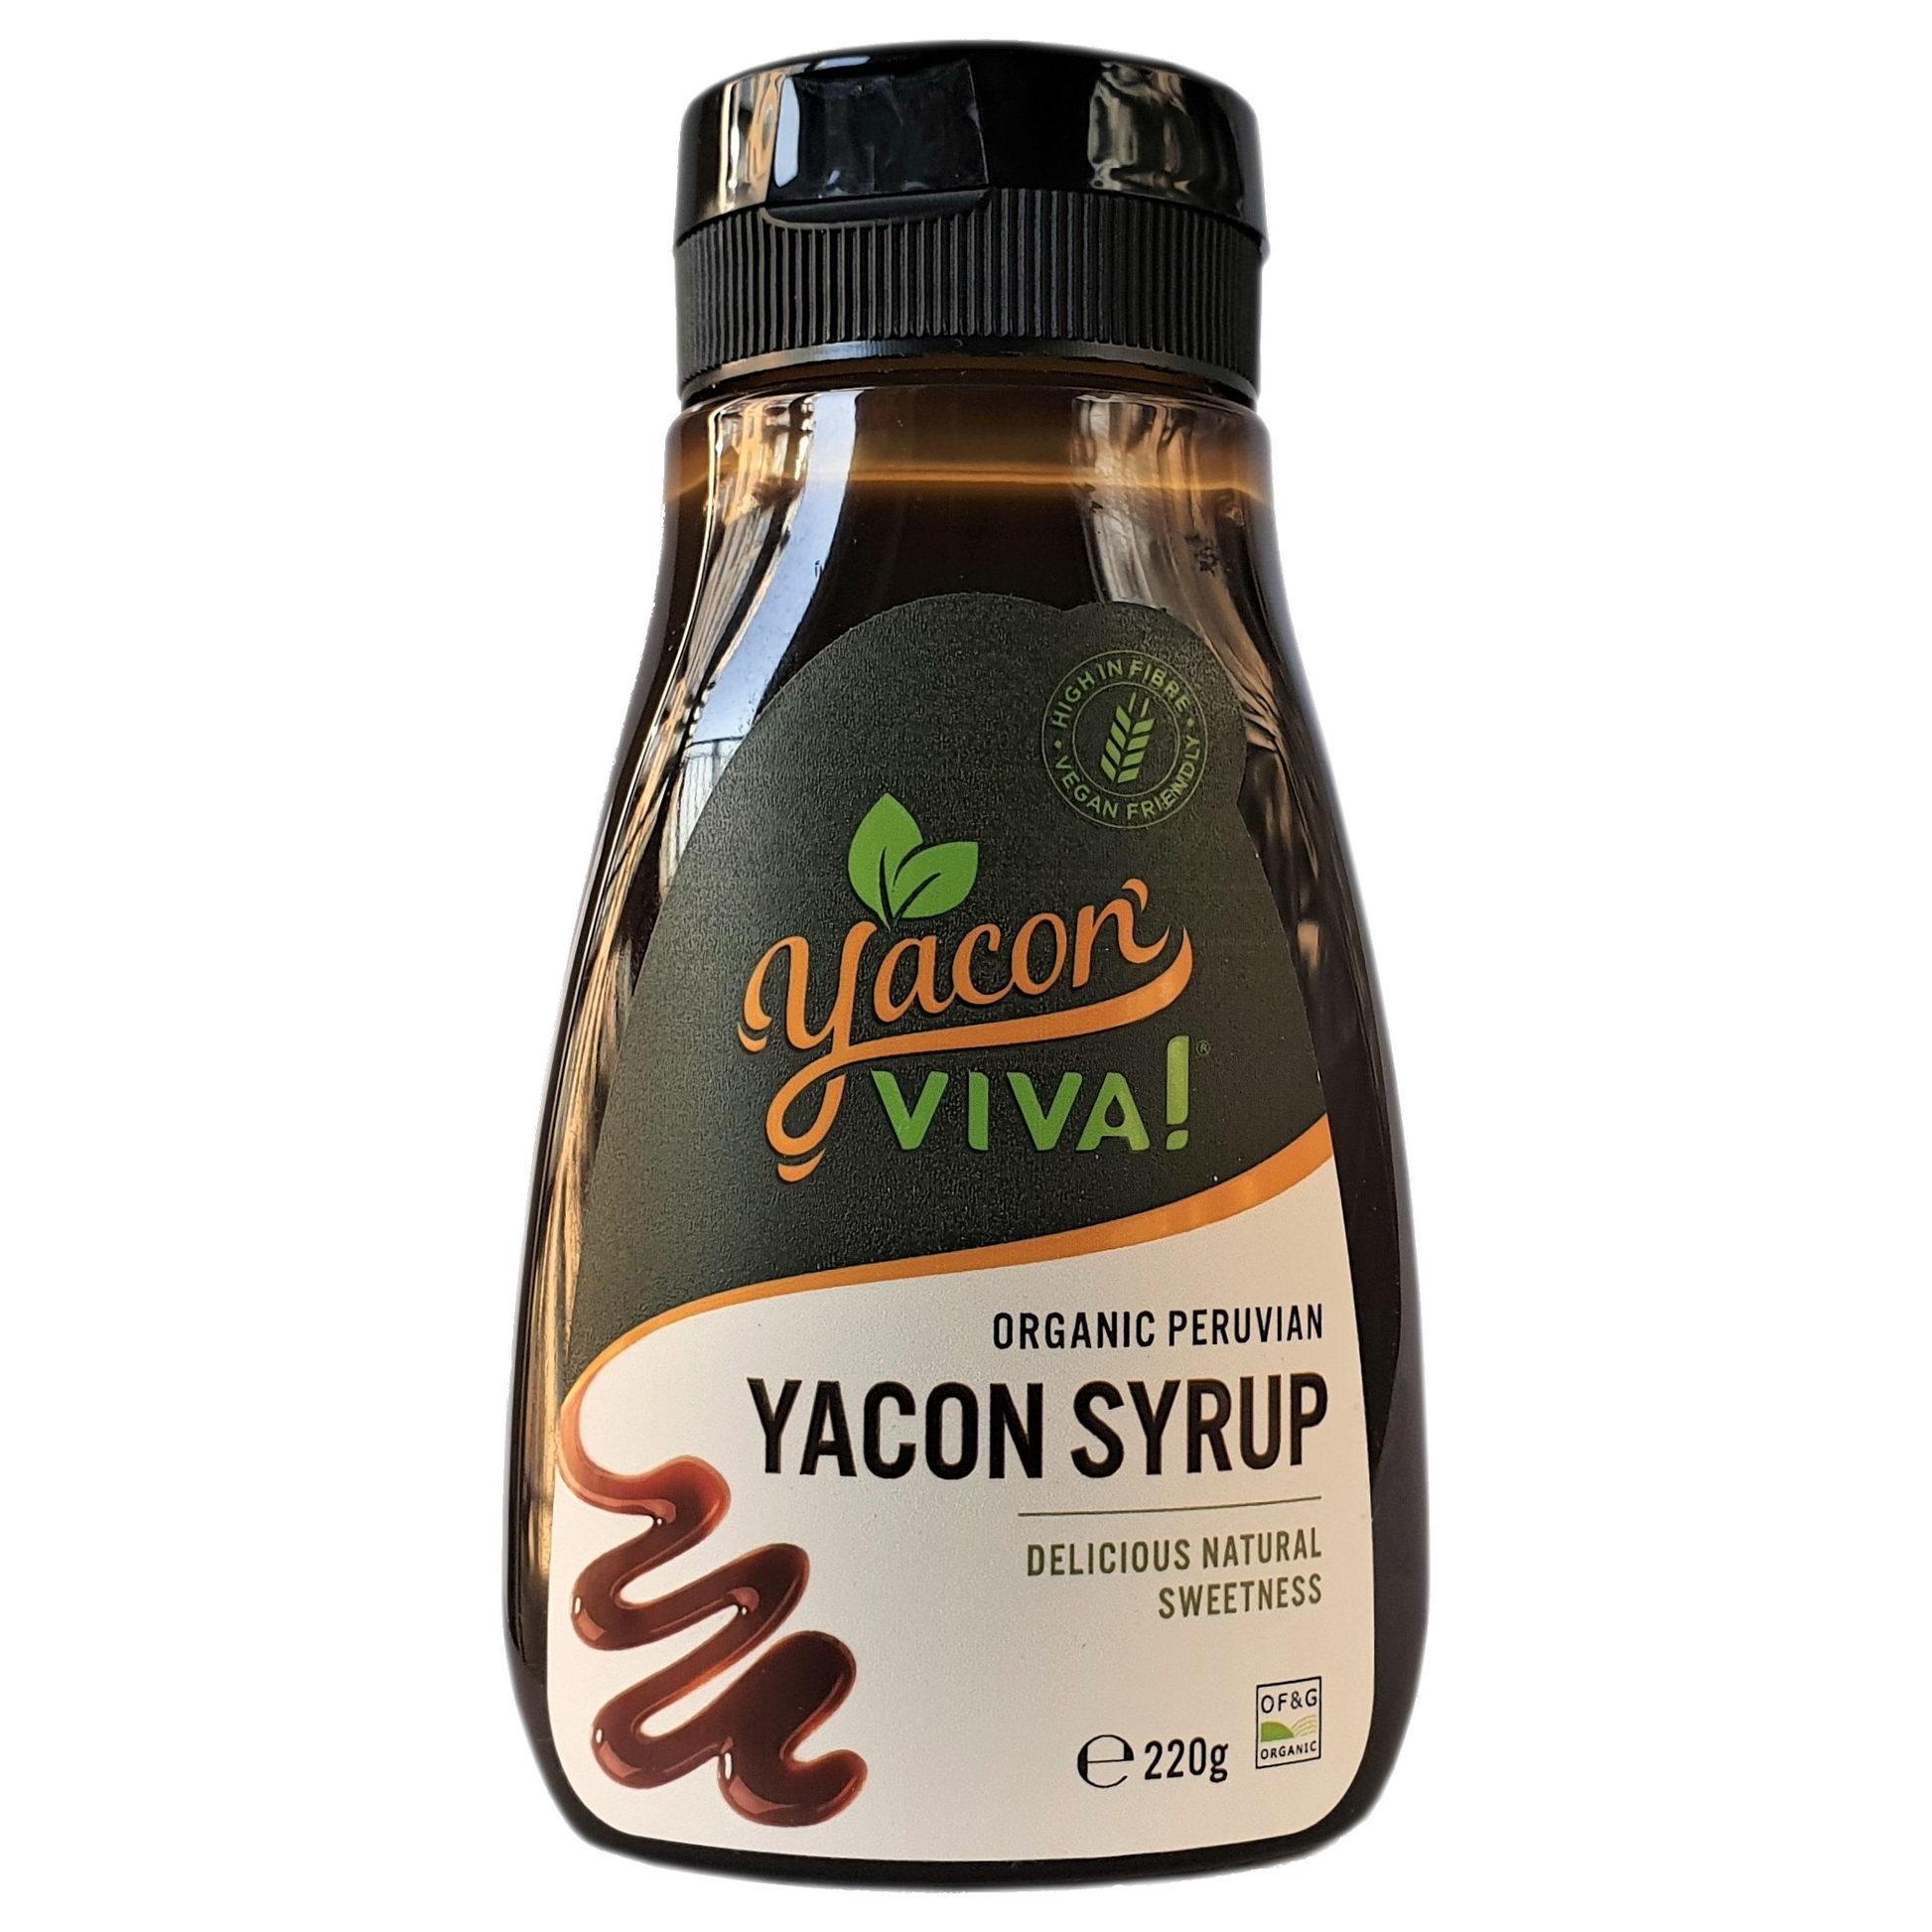 YaconViva! Organic Peruvian Yacon Syrup 560g,220g